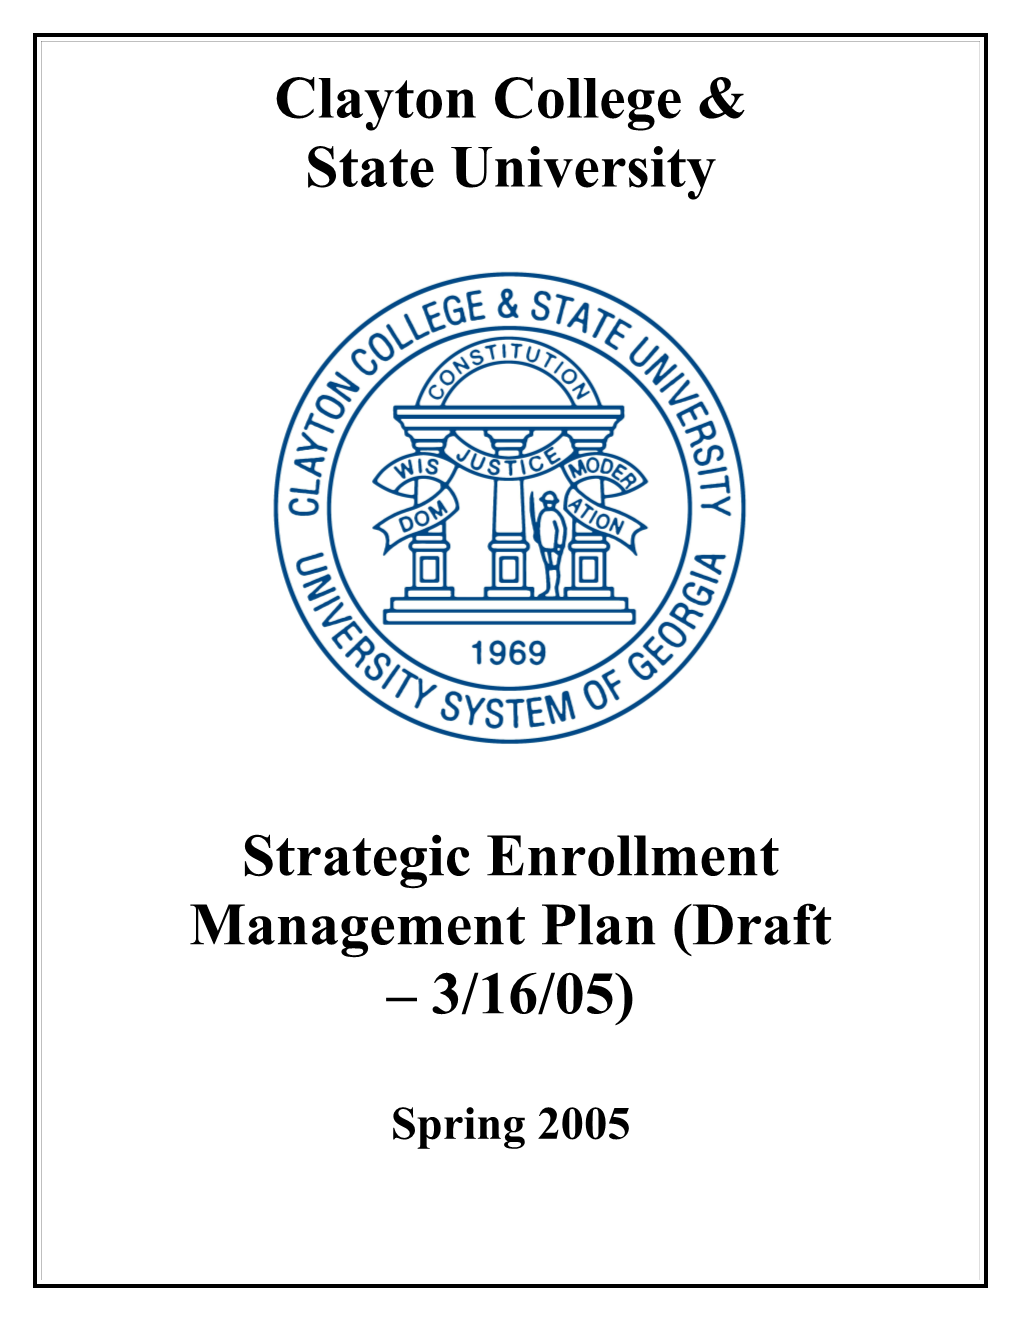 Strategic Enrollment Management Plan(Draft 3/16/05)